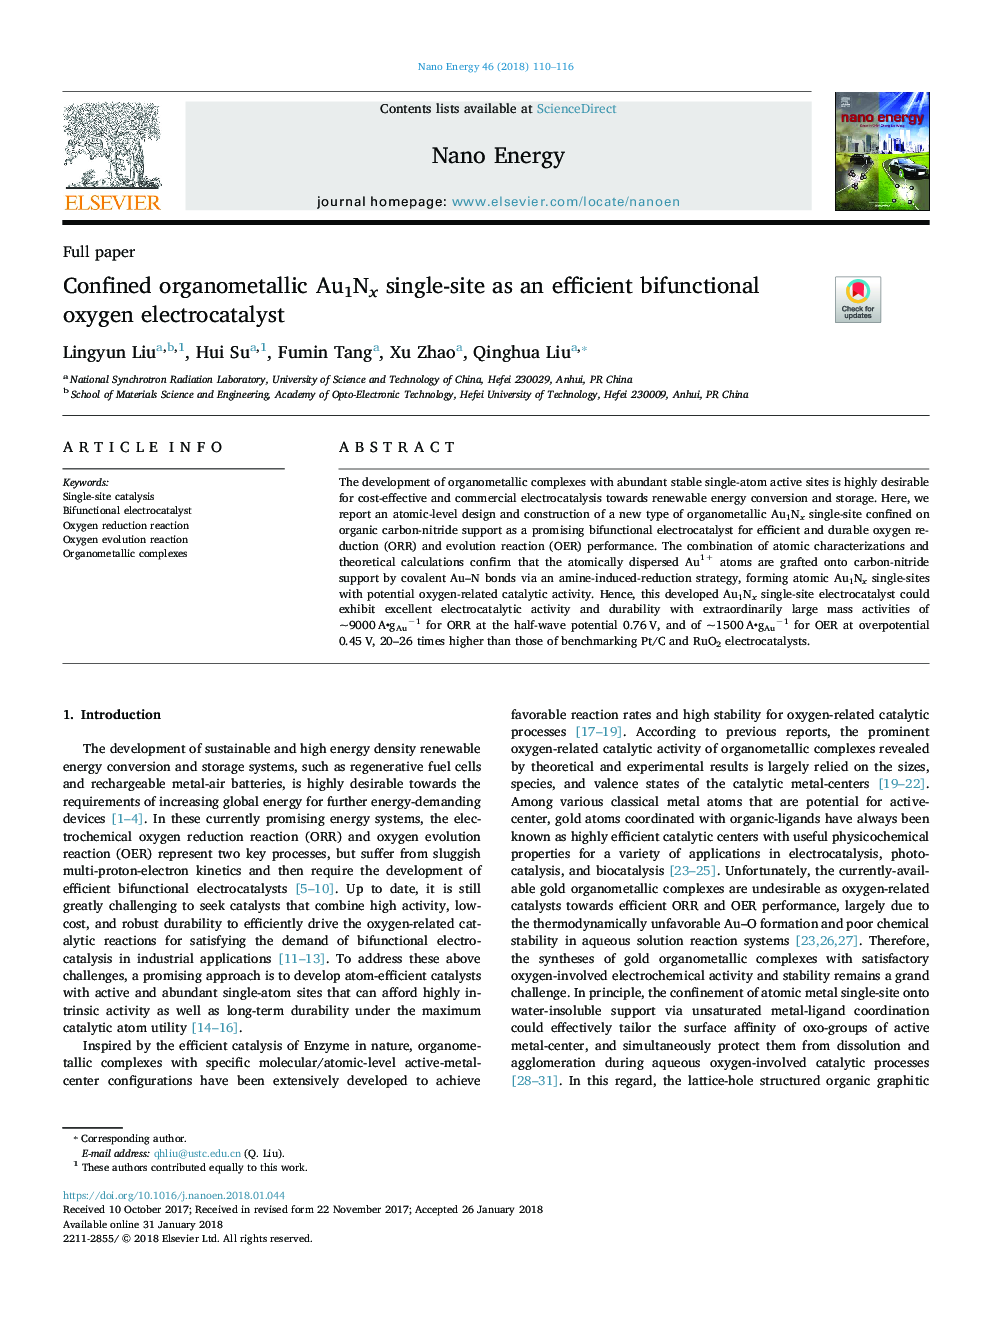 Confined organometallic Au1Nx single-site as an efficient bifunctional oxygen electrocatalyst